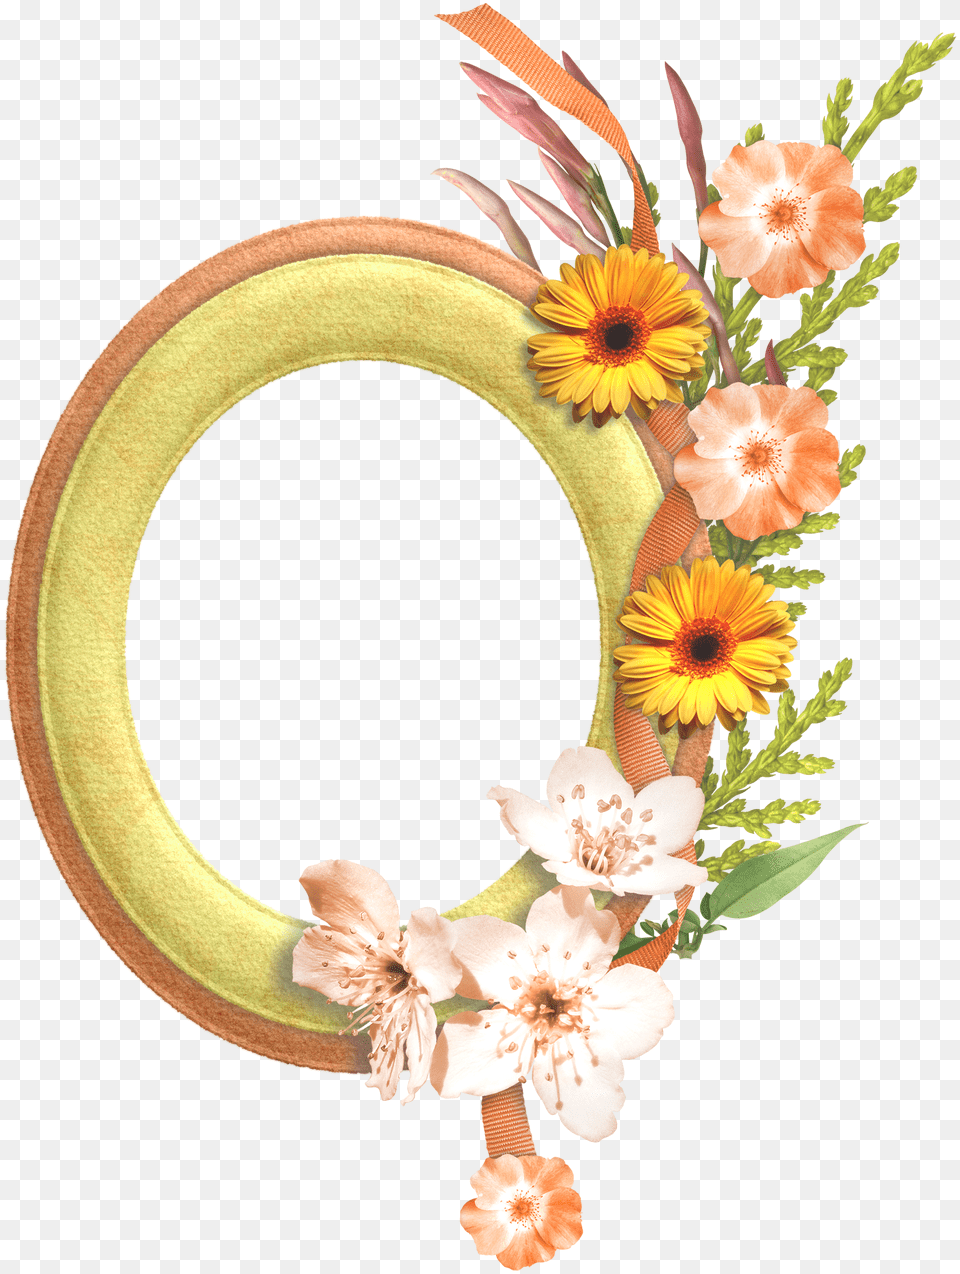 Download Flower Oval Frame With No Background Funeral Frames For Flowers, Art, Floral Design, Graphics, Pattern Png Image